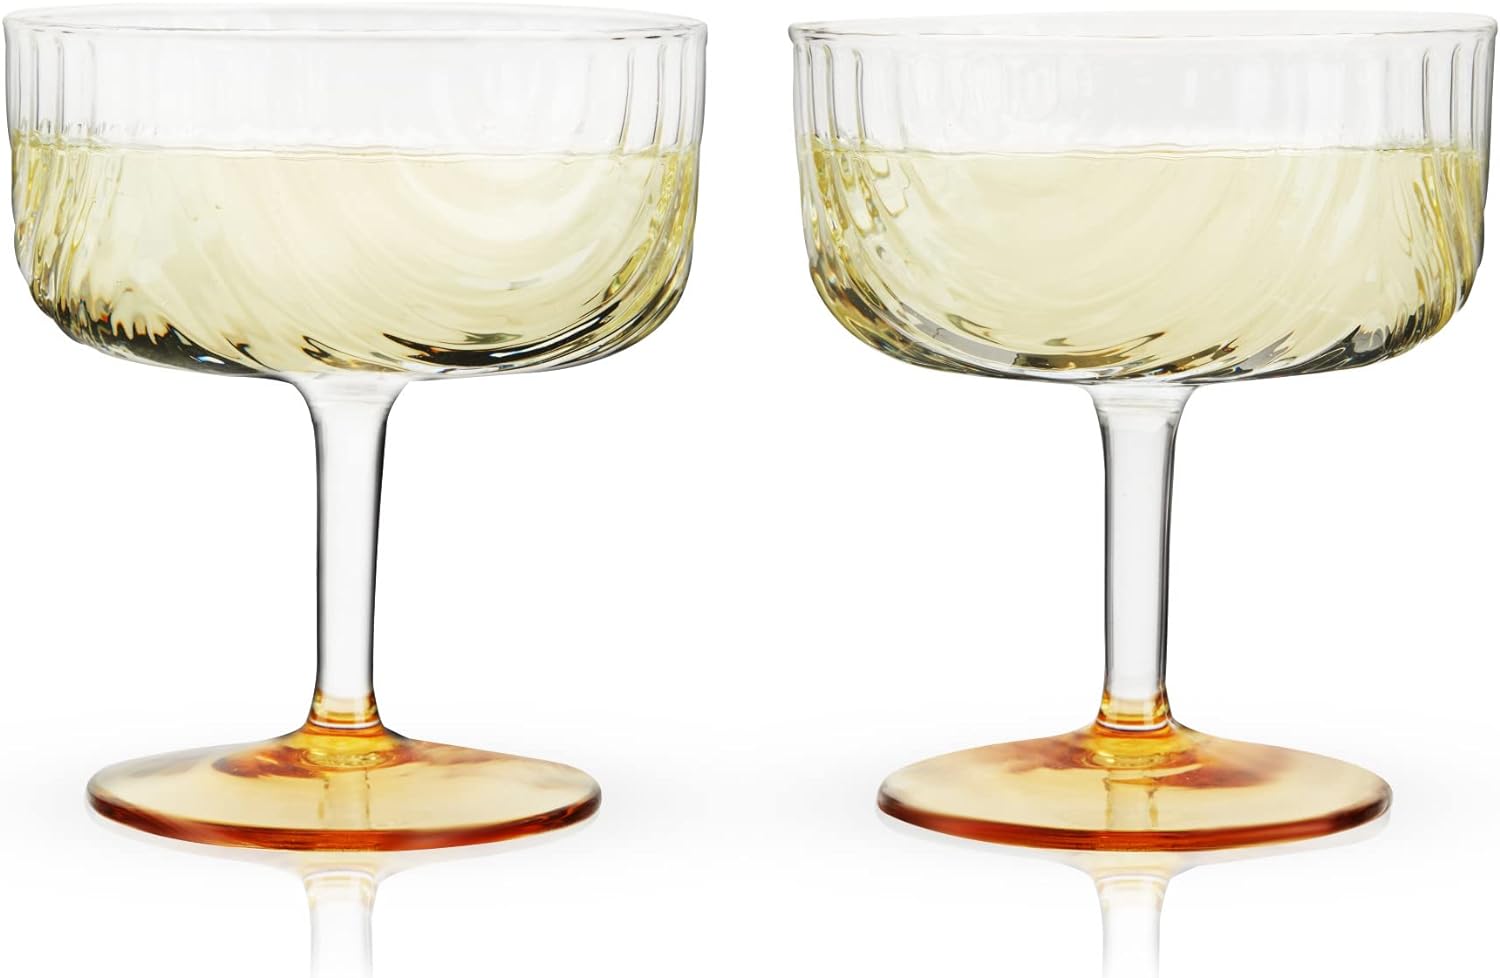 Viski 10981 Gatsby Coupes Stemmed Cocktail Glasses 8 Oz, Set of 2